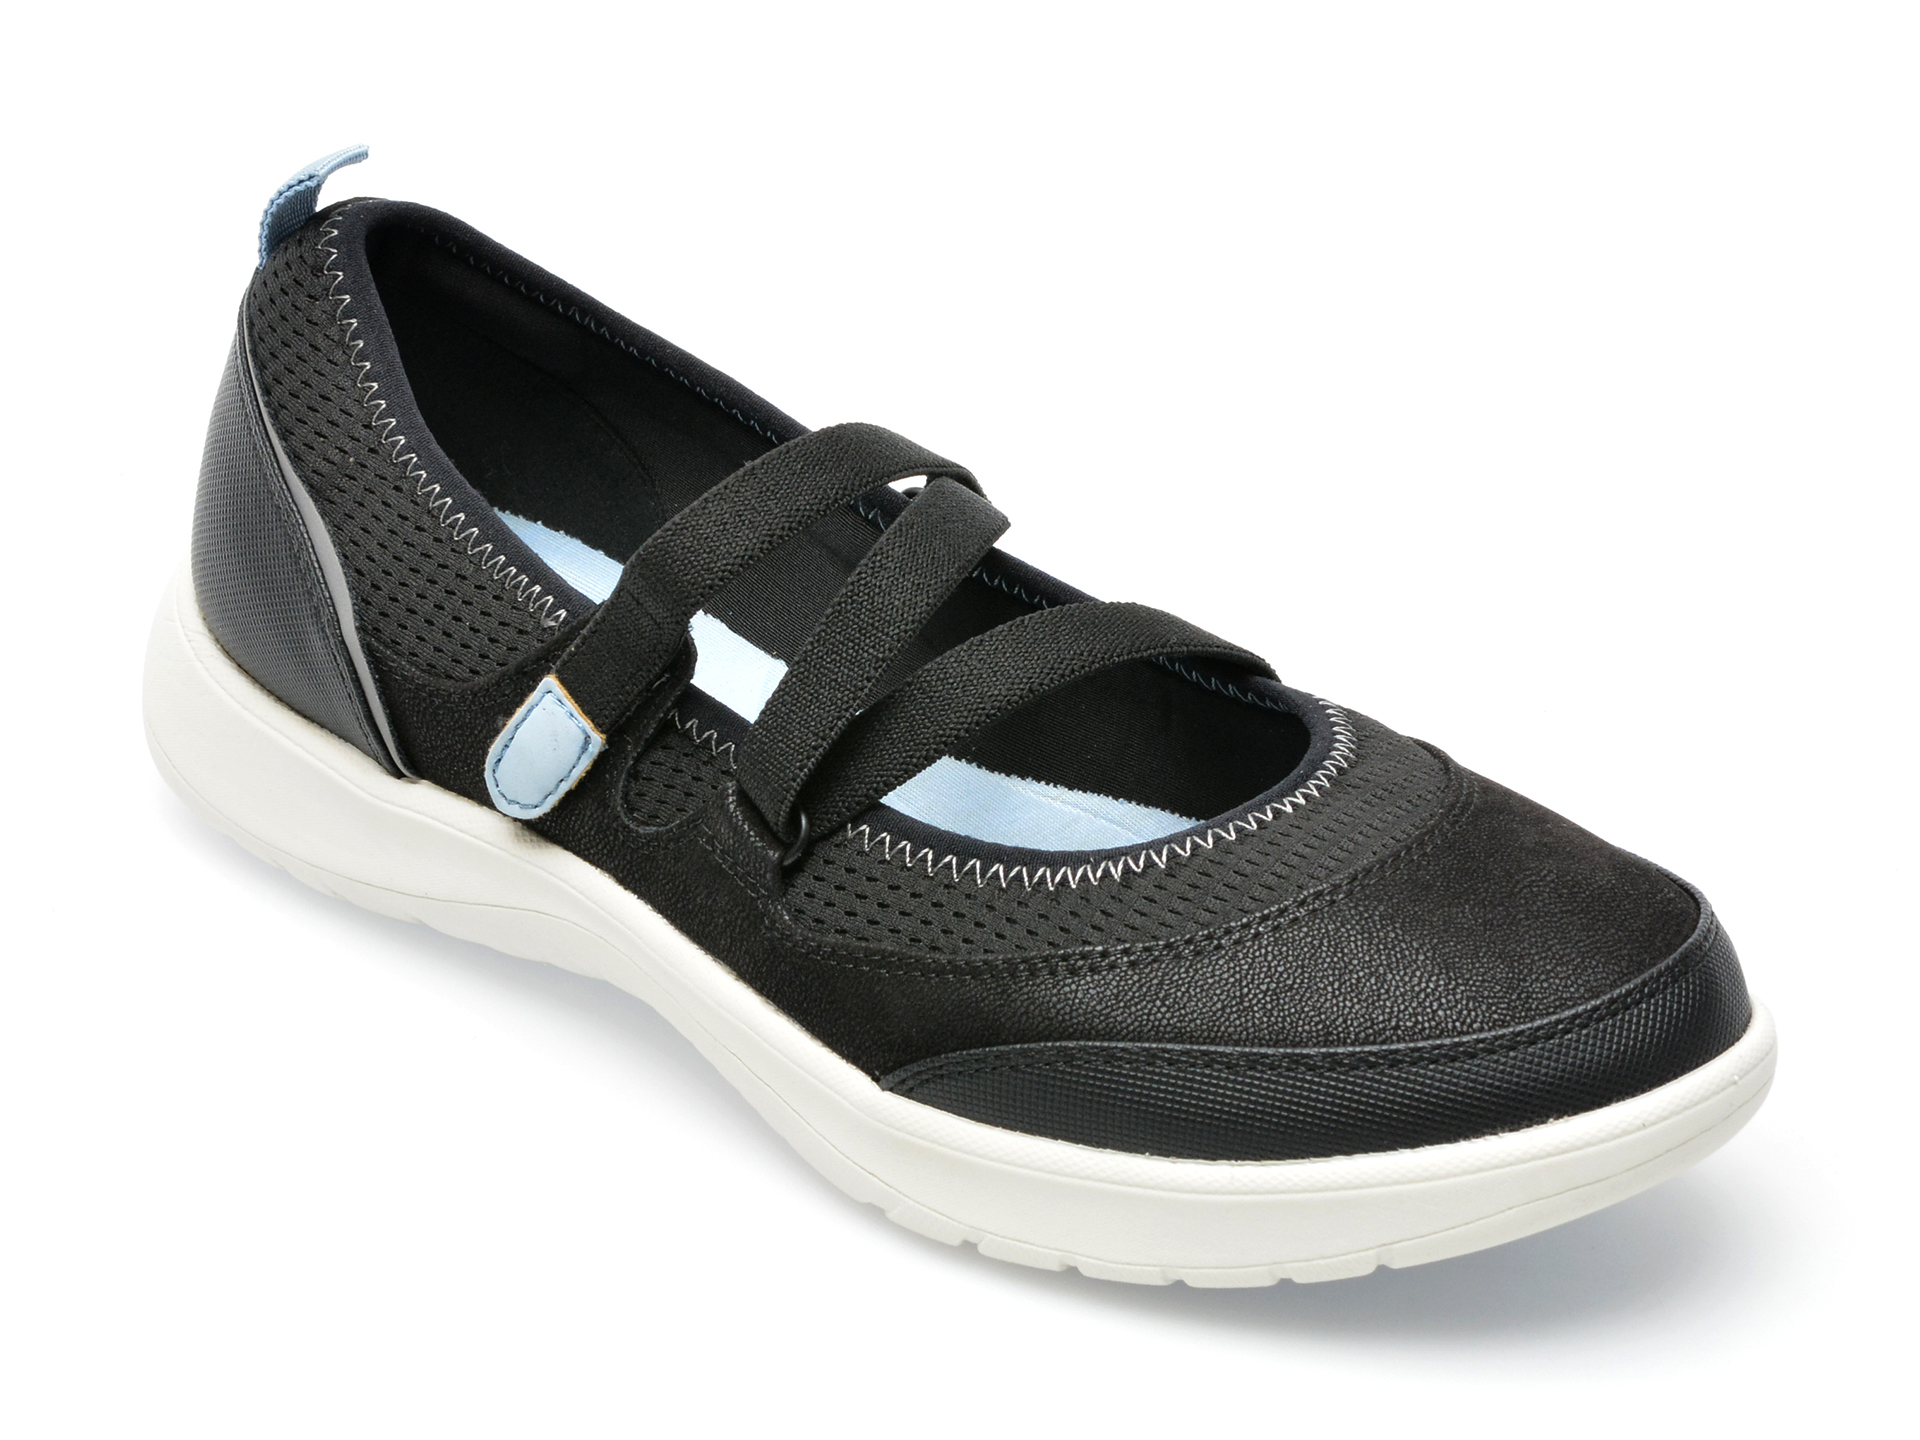 Pantofi CLARKS negri, ADELLA SAIL 0912, din material textil Clarks